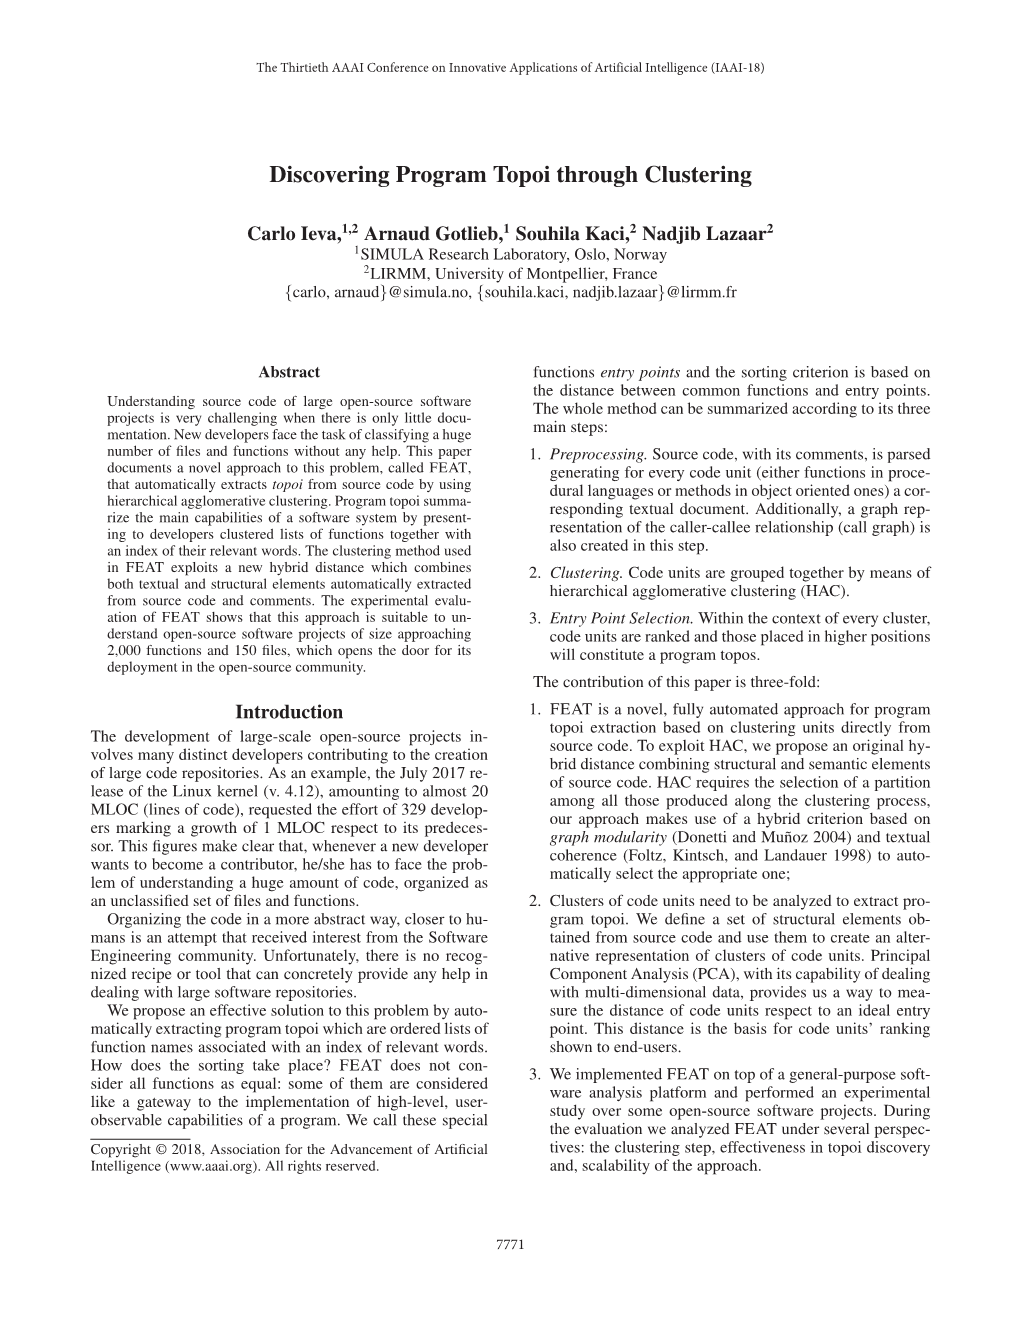 Discovering Program Topoi Through Clustering